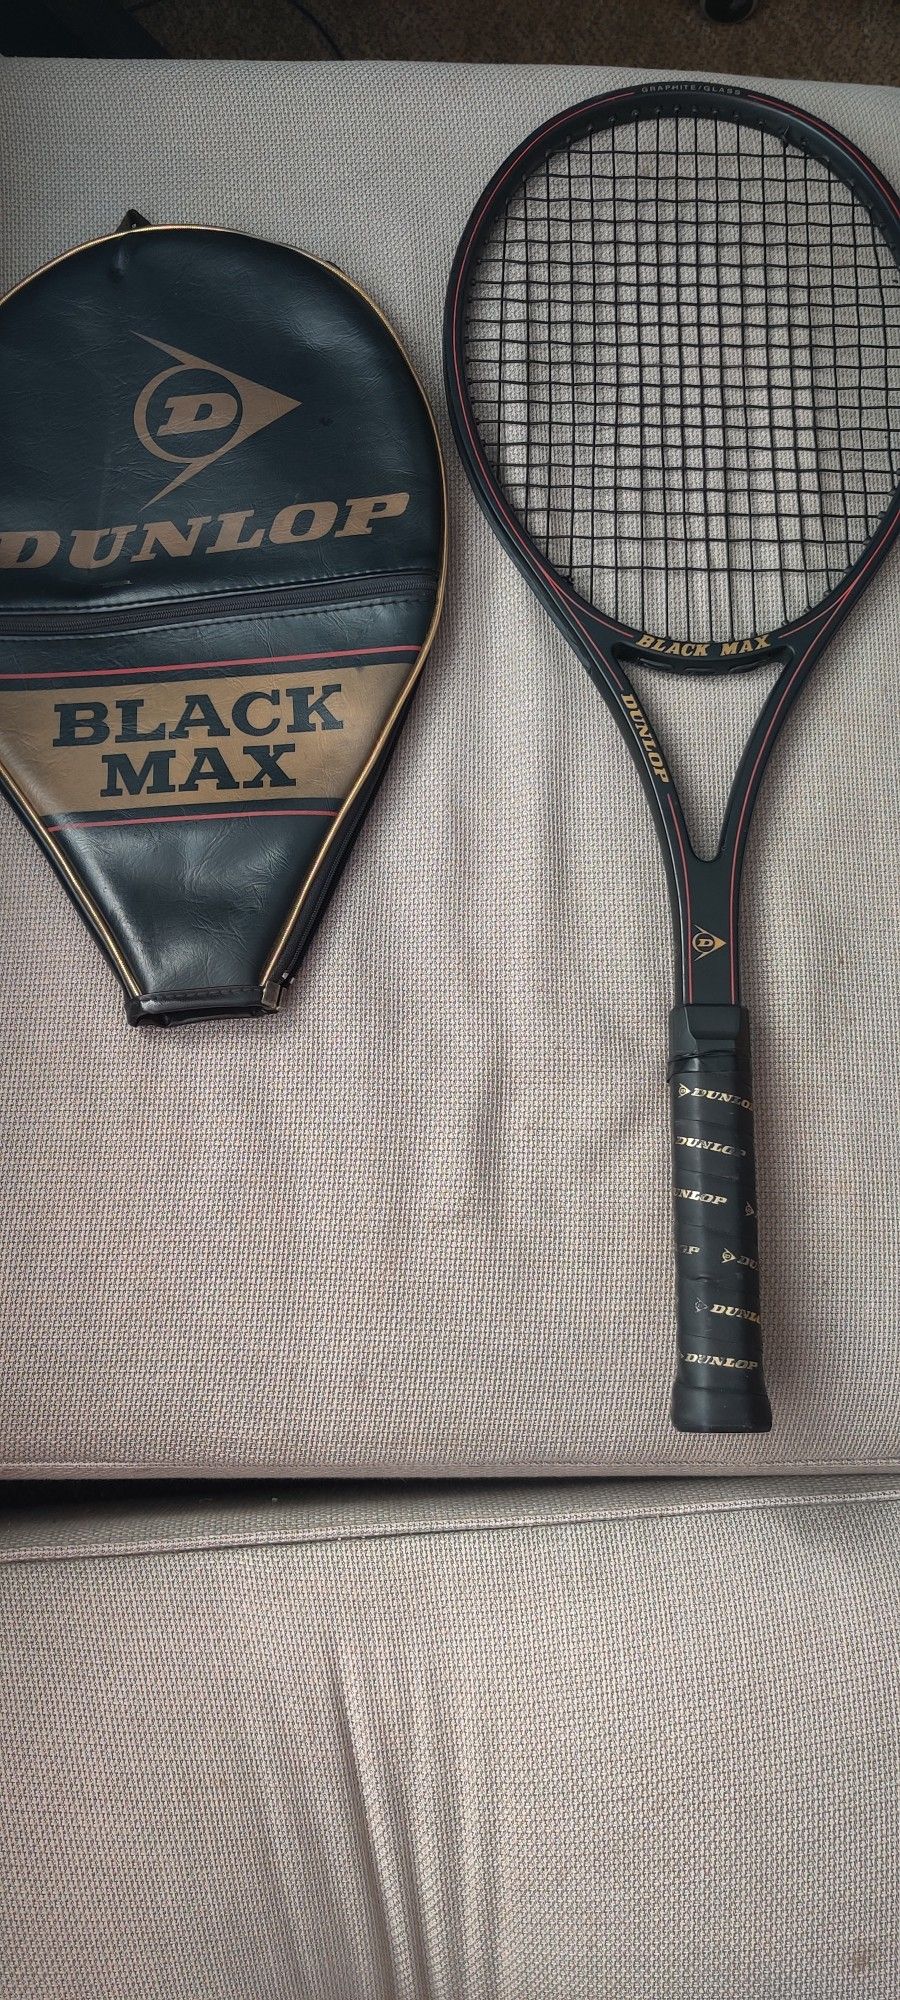 Dunlop Black Max Tennis Racket